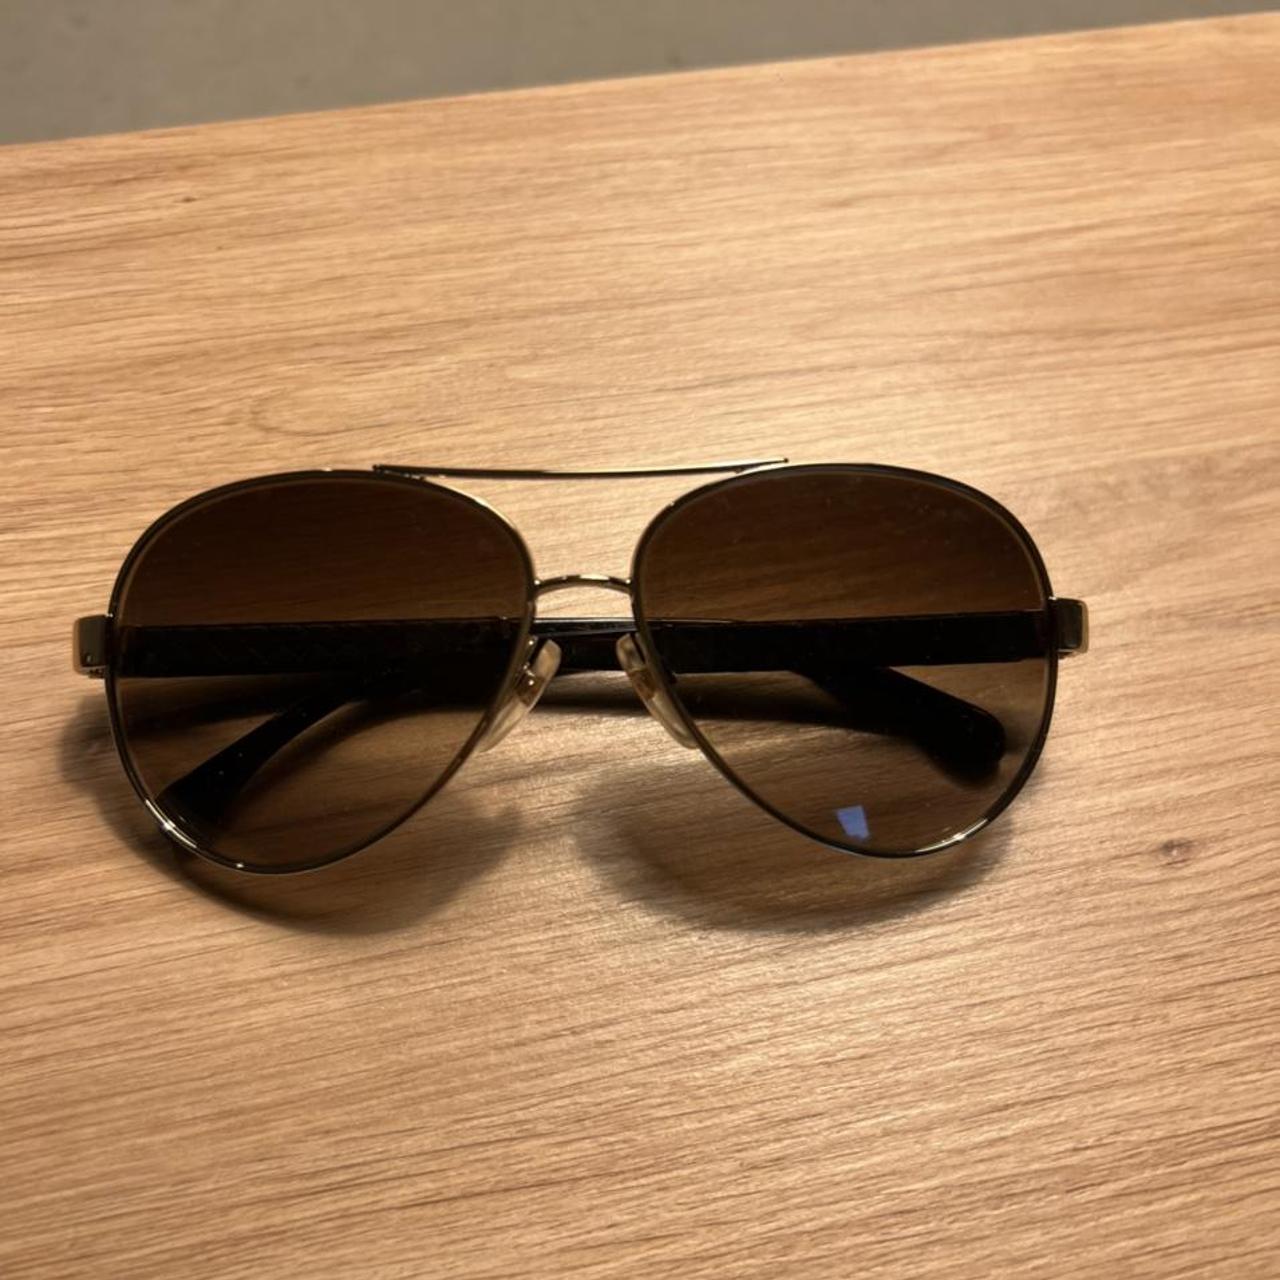 Light/Grey clear Rimless “Chanel” Sunglasses